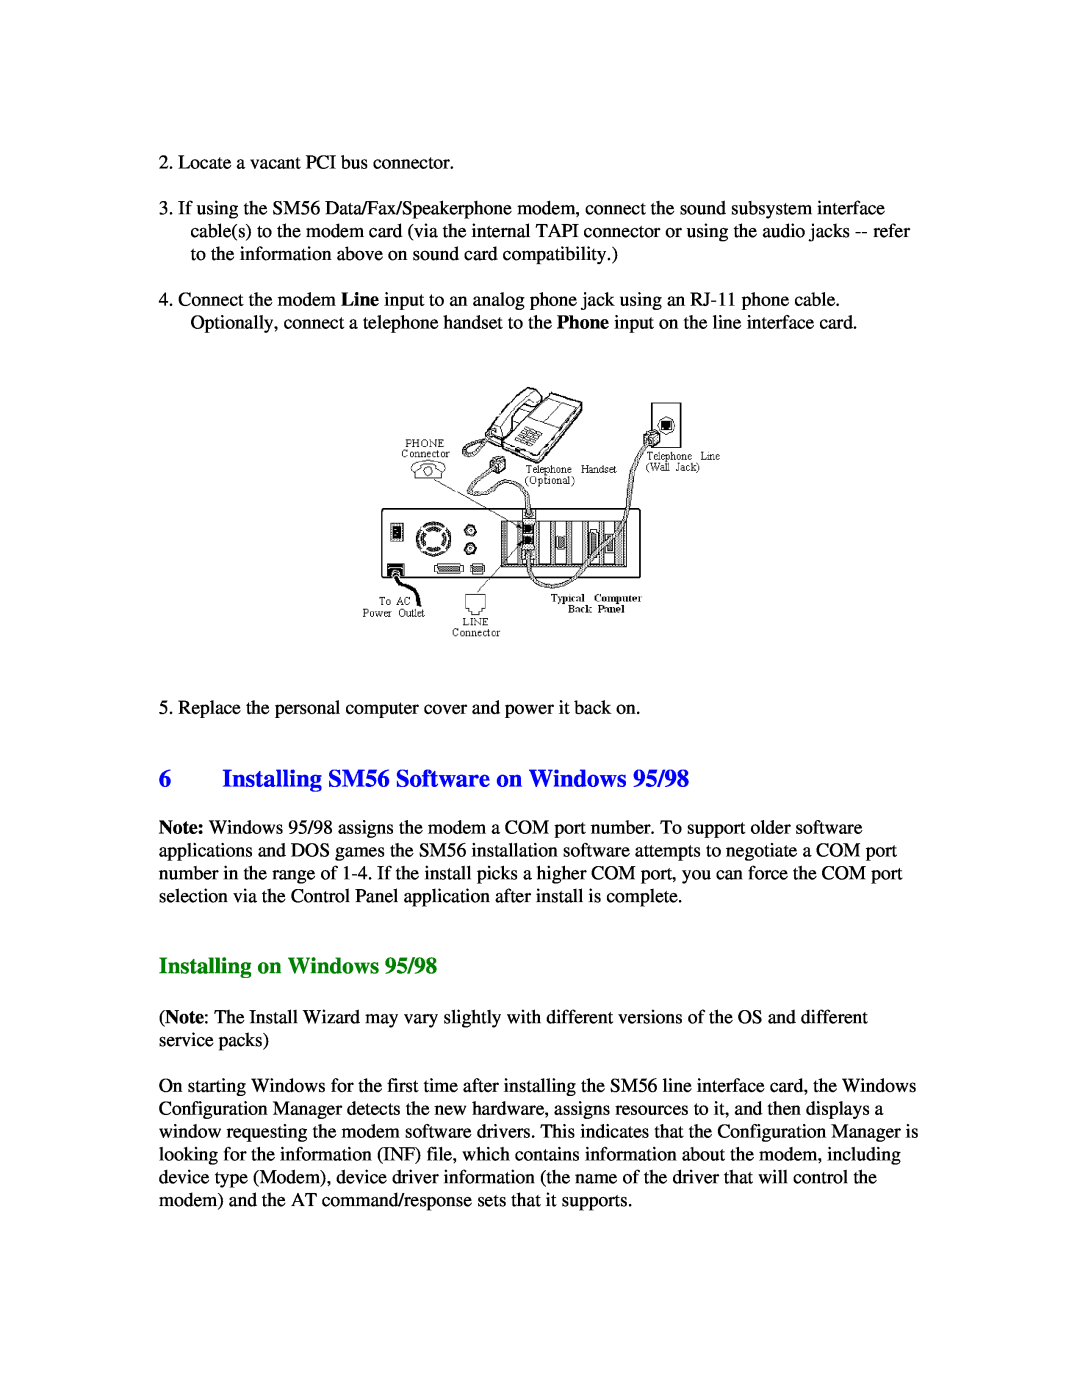 Motorola quick start Installing SM56 Software on Windows 95/98, Installing on Windows 95/98 